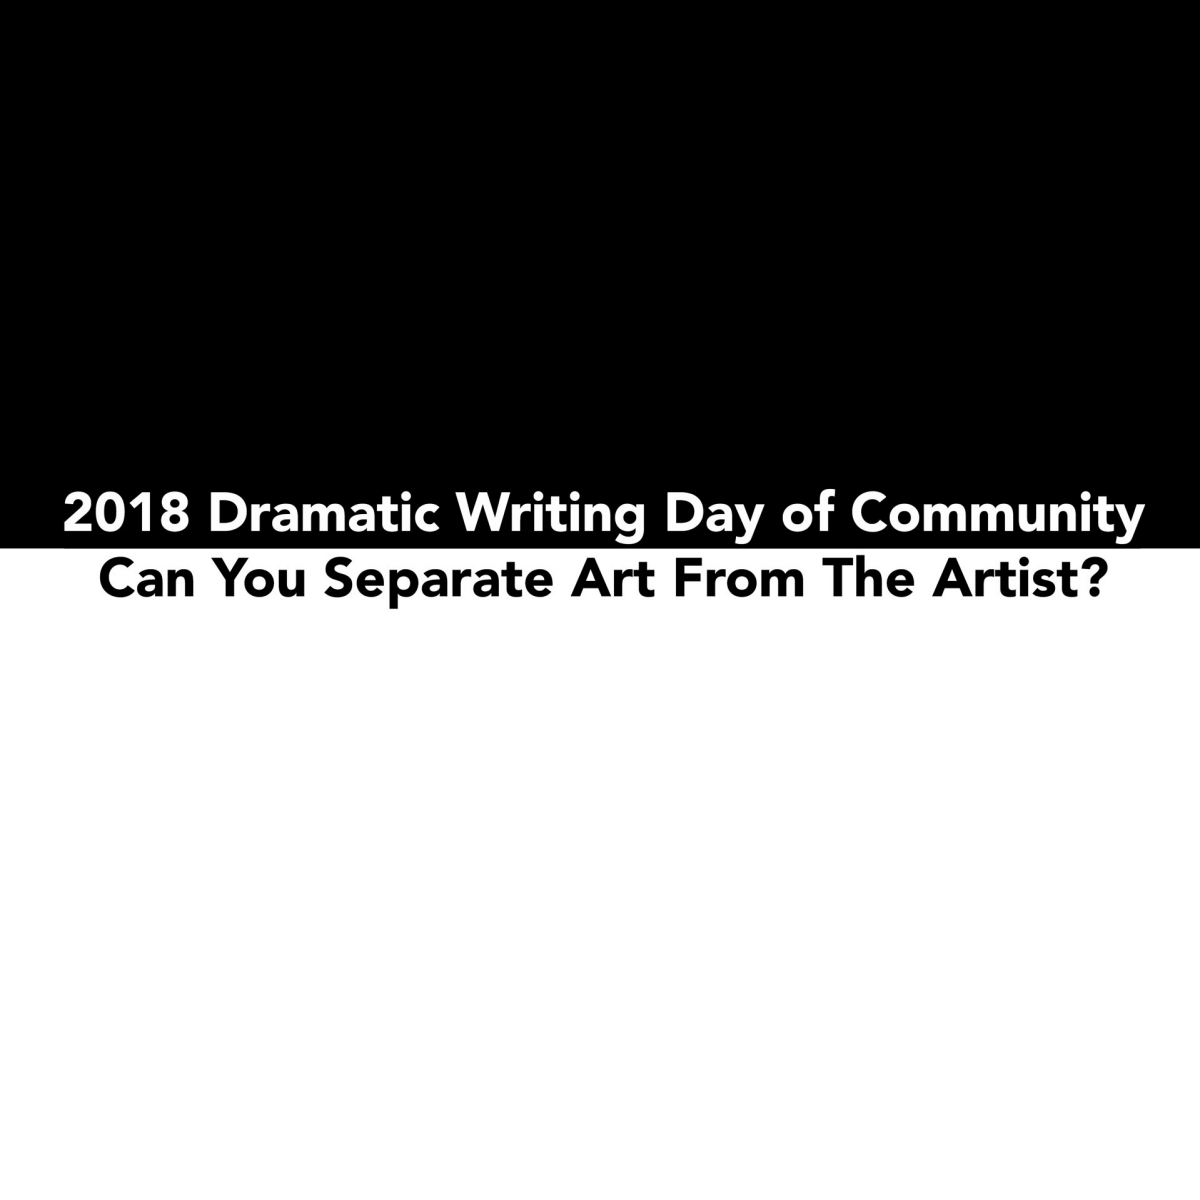 2018 Dramatic Writing Day of Community